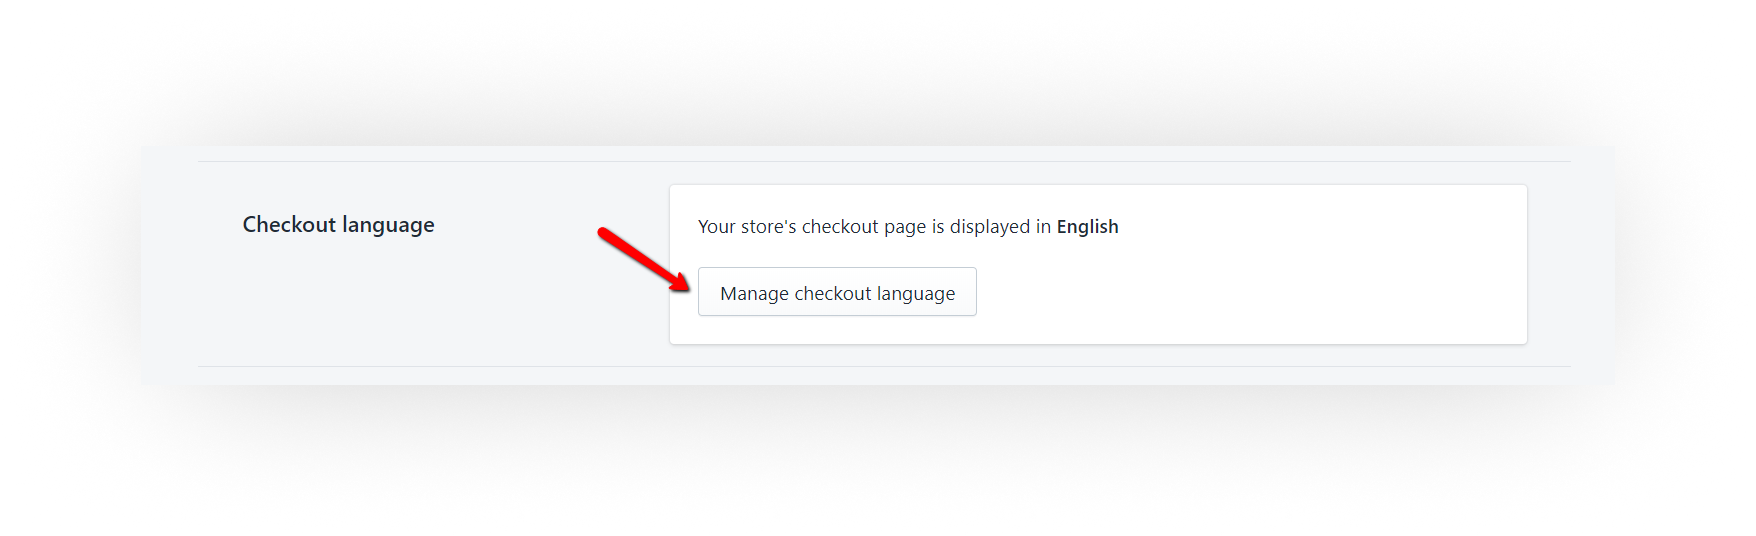 manage_checkout_language_SMSBump